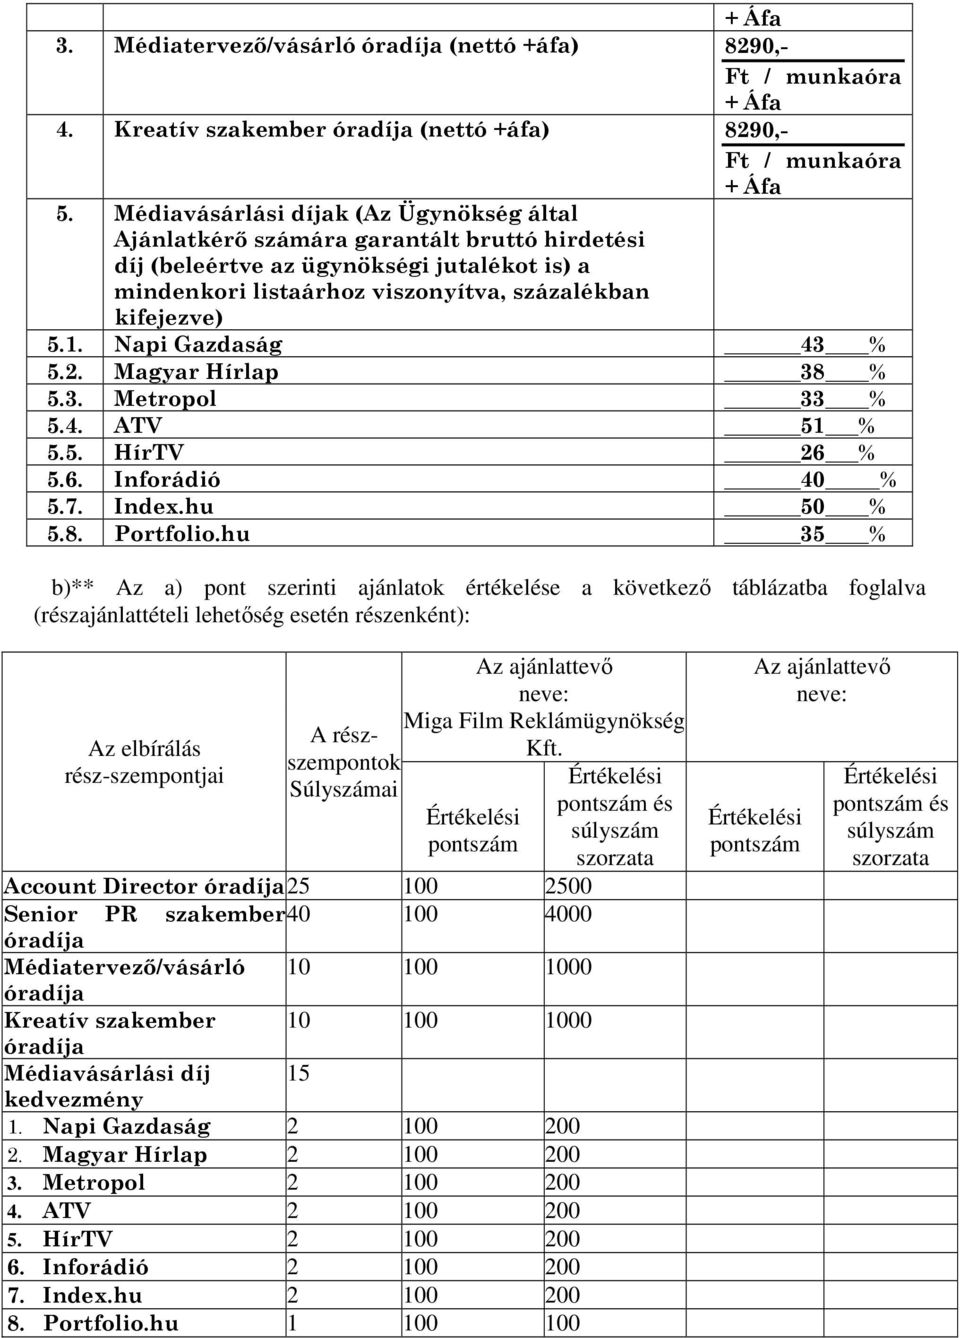 Napi Gazdaság 43 % 5.2. Magyar Hírlap 38 % 5.3. Metropol 33 % 5.4. ATV 51 % 5.5. HírTV 26 % 5.6. Inforádió 40 % 5.7. Index.hu 50 % 5.8. Portfolio.